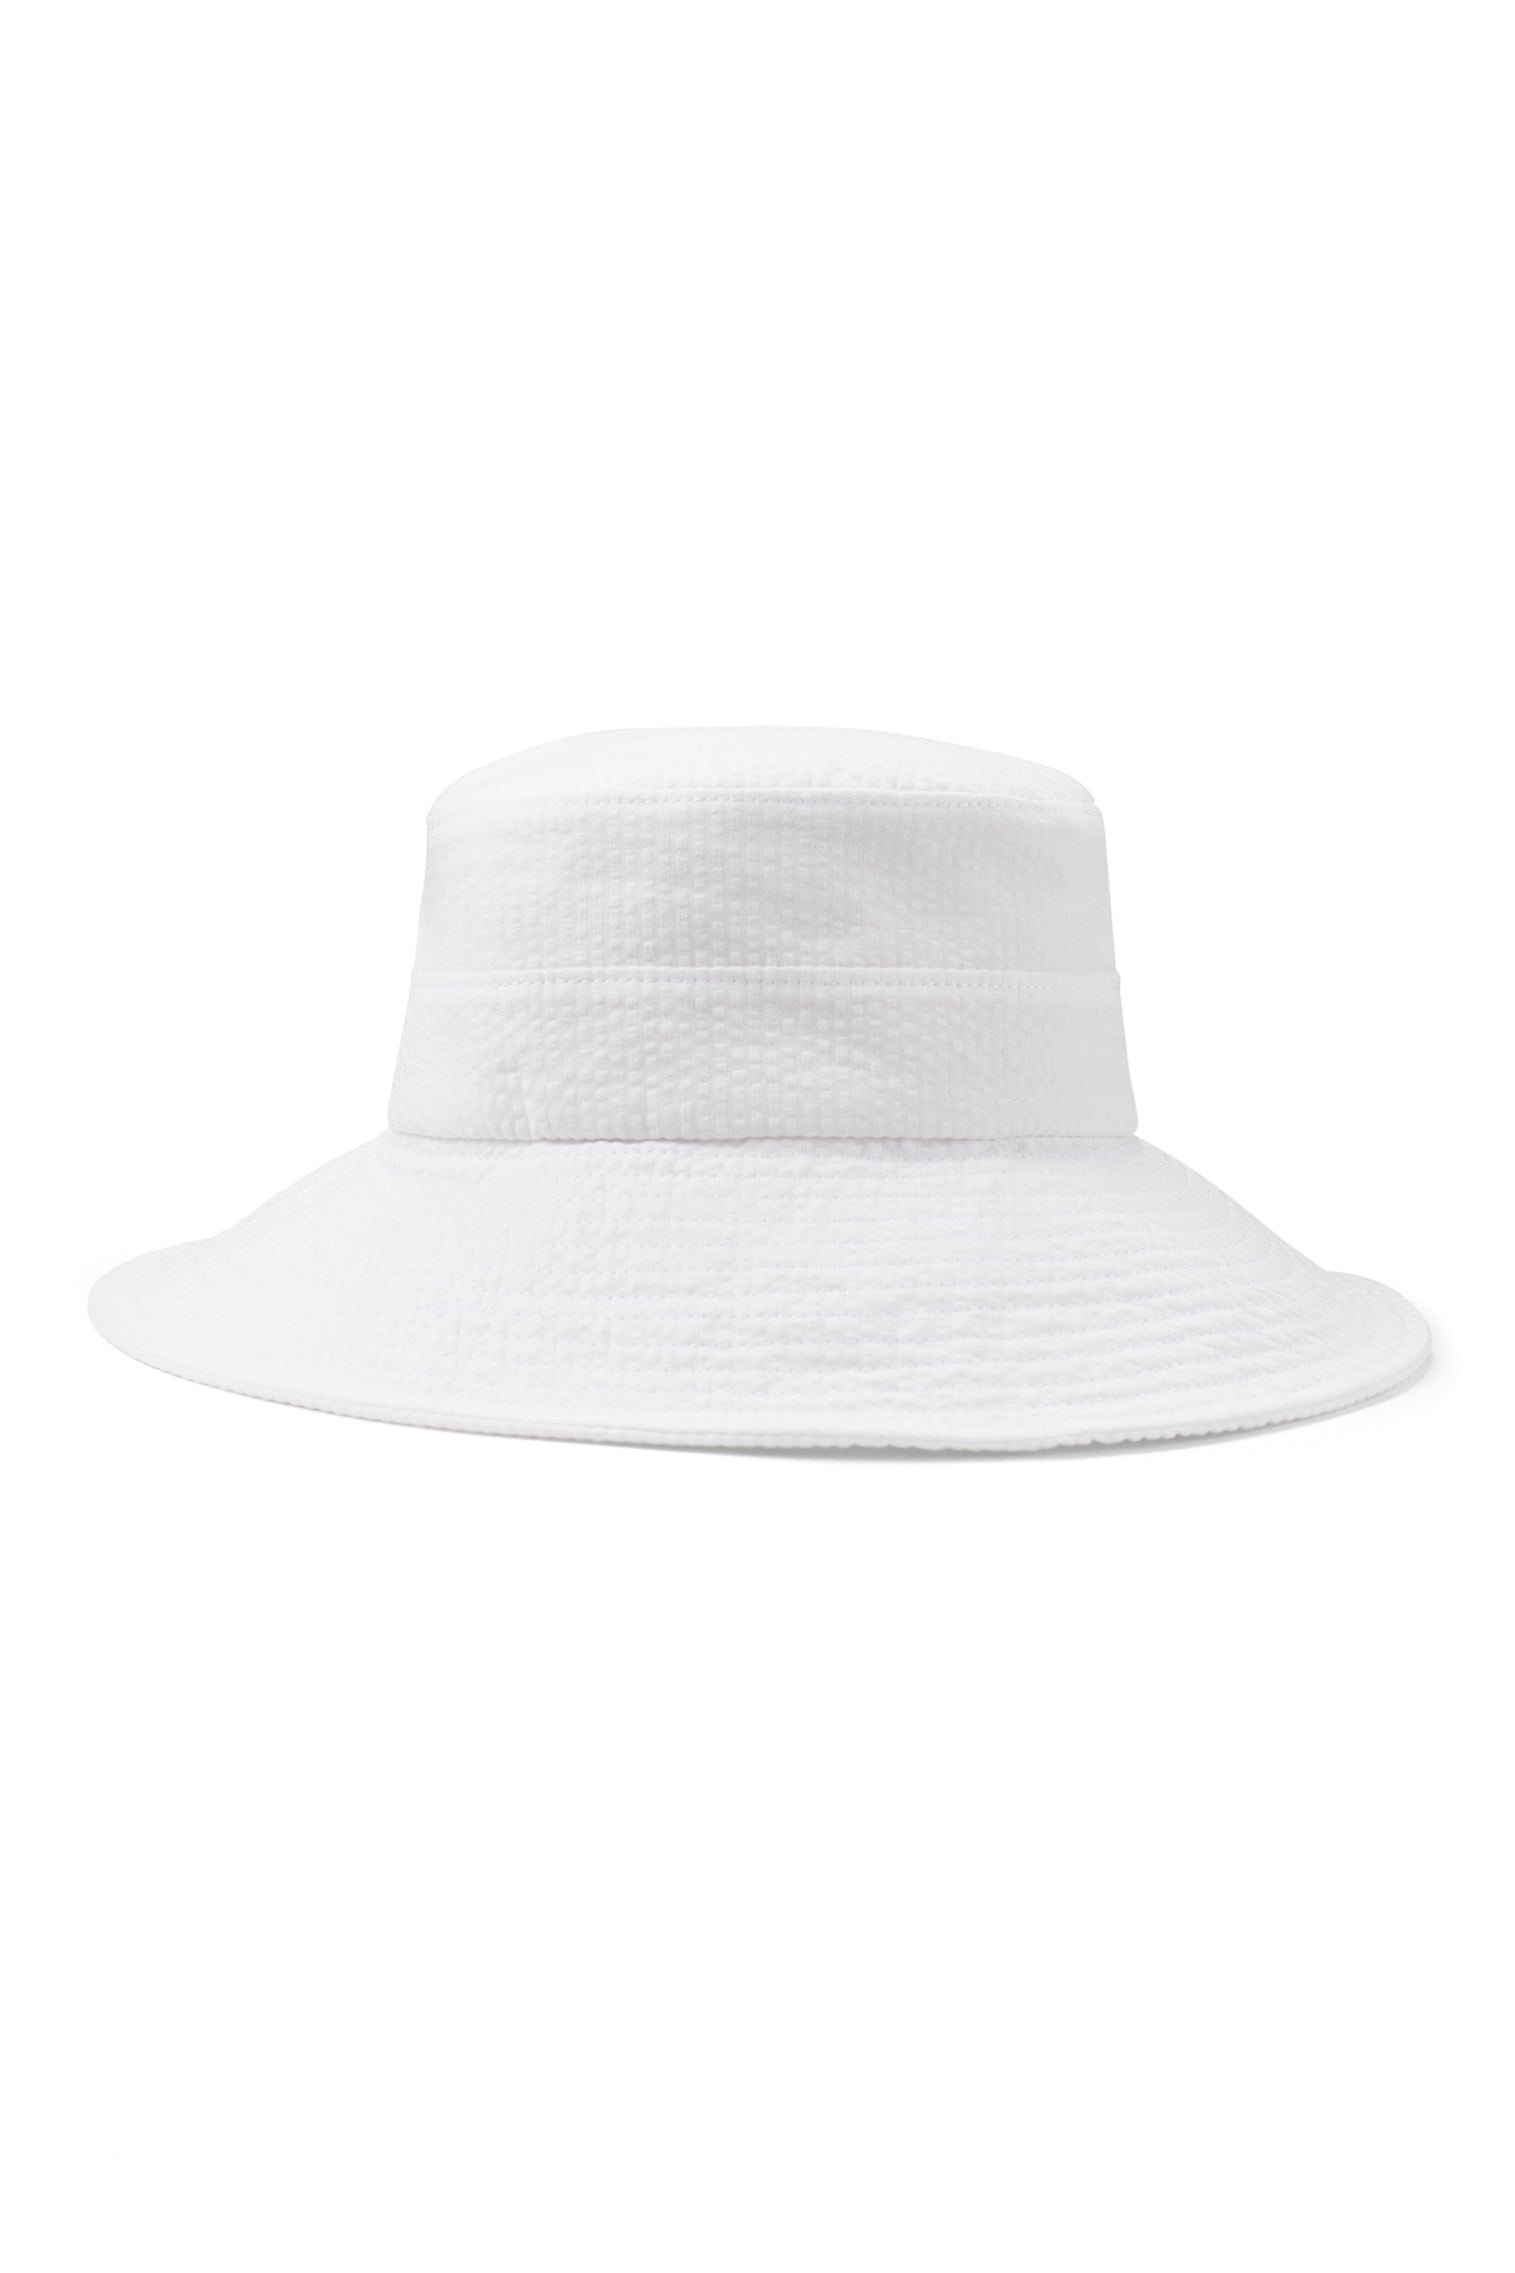 Margot Seersucker Sun Hat - Packable Hats for Travel - Lock & Co. Hatters London UK